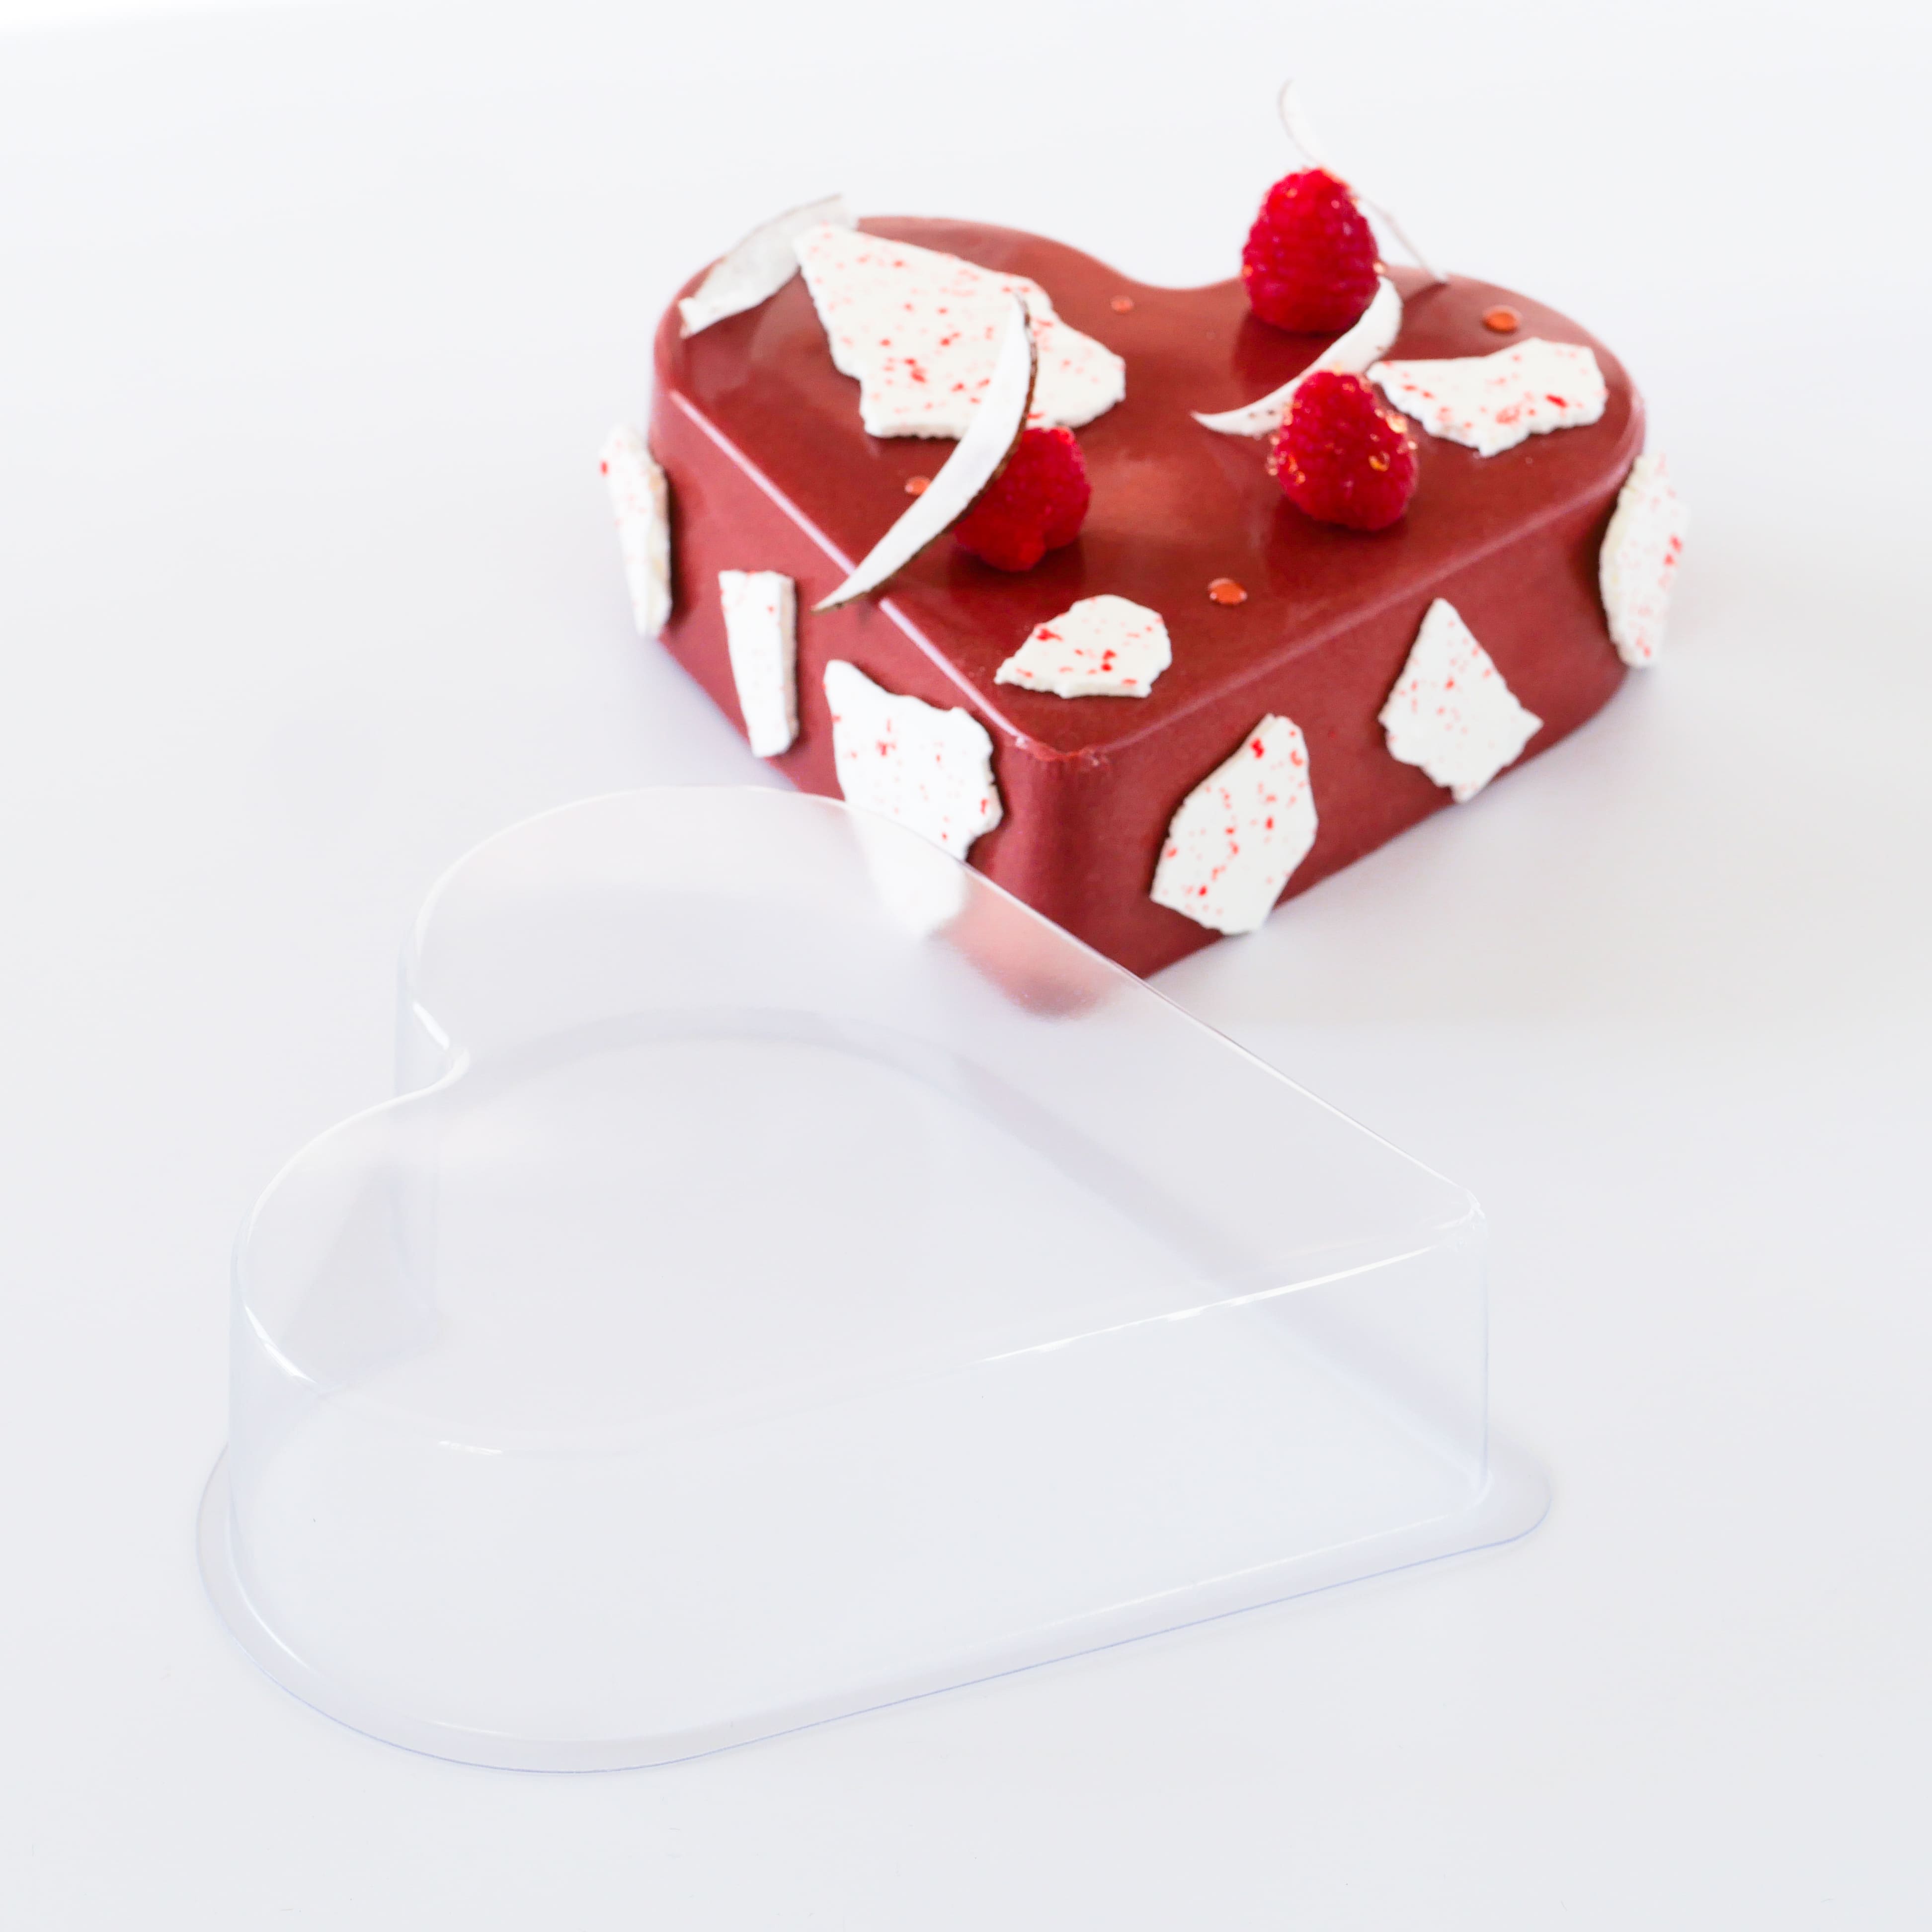 Molde para hornear profesional en forma de corazón fabricado con plástico reciclable